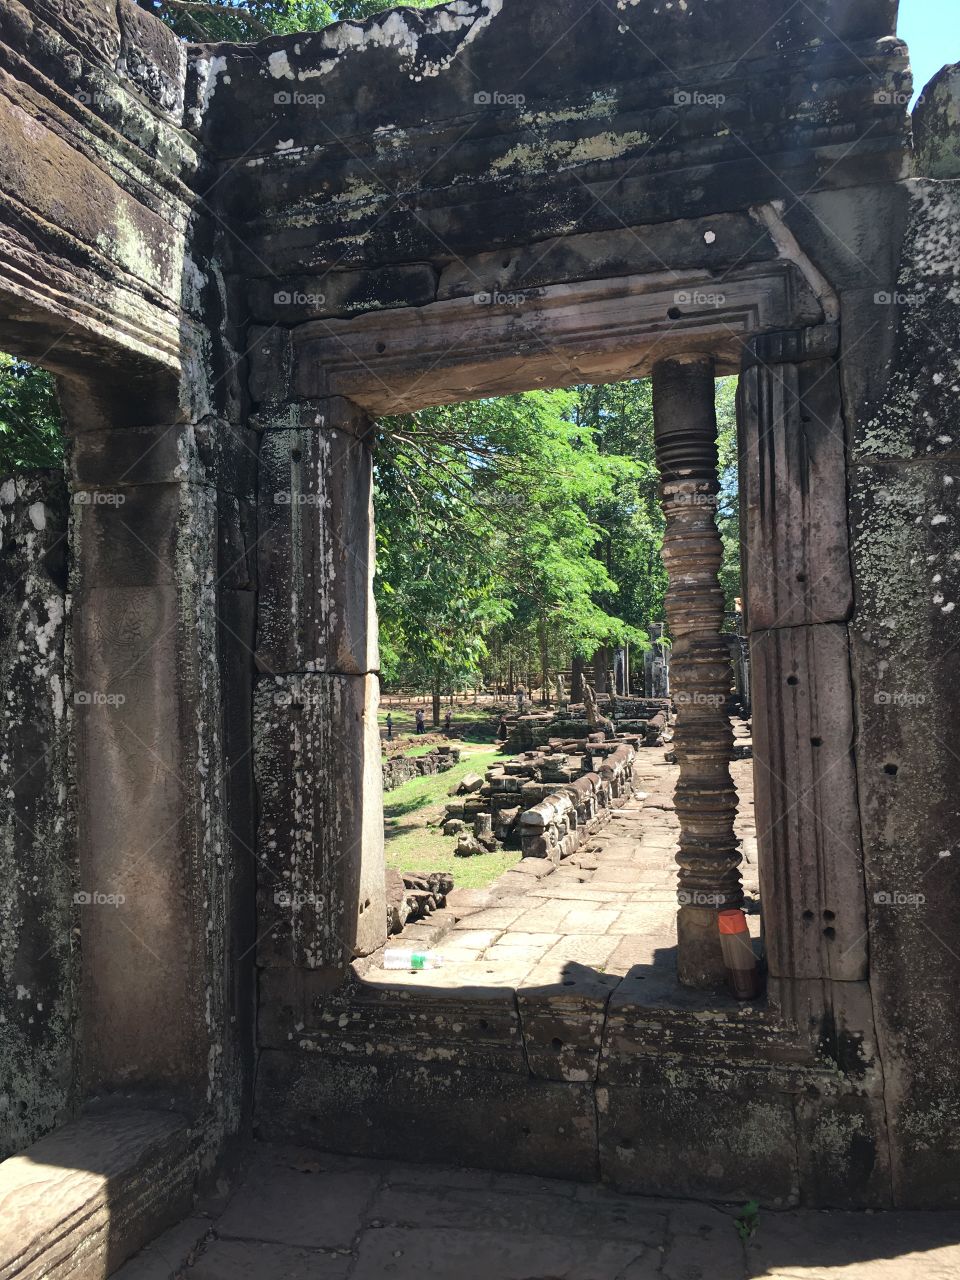 Threshold
Angkor Thom, Cambodia